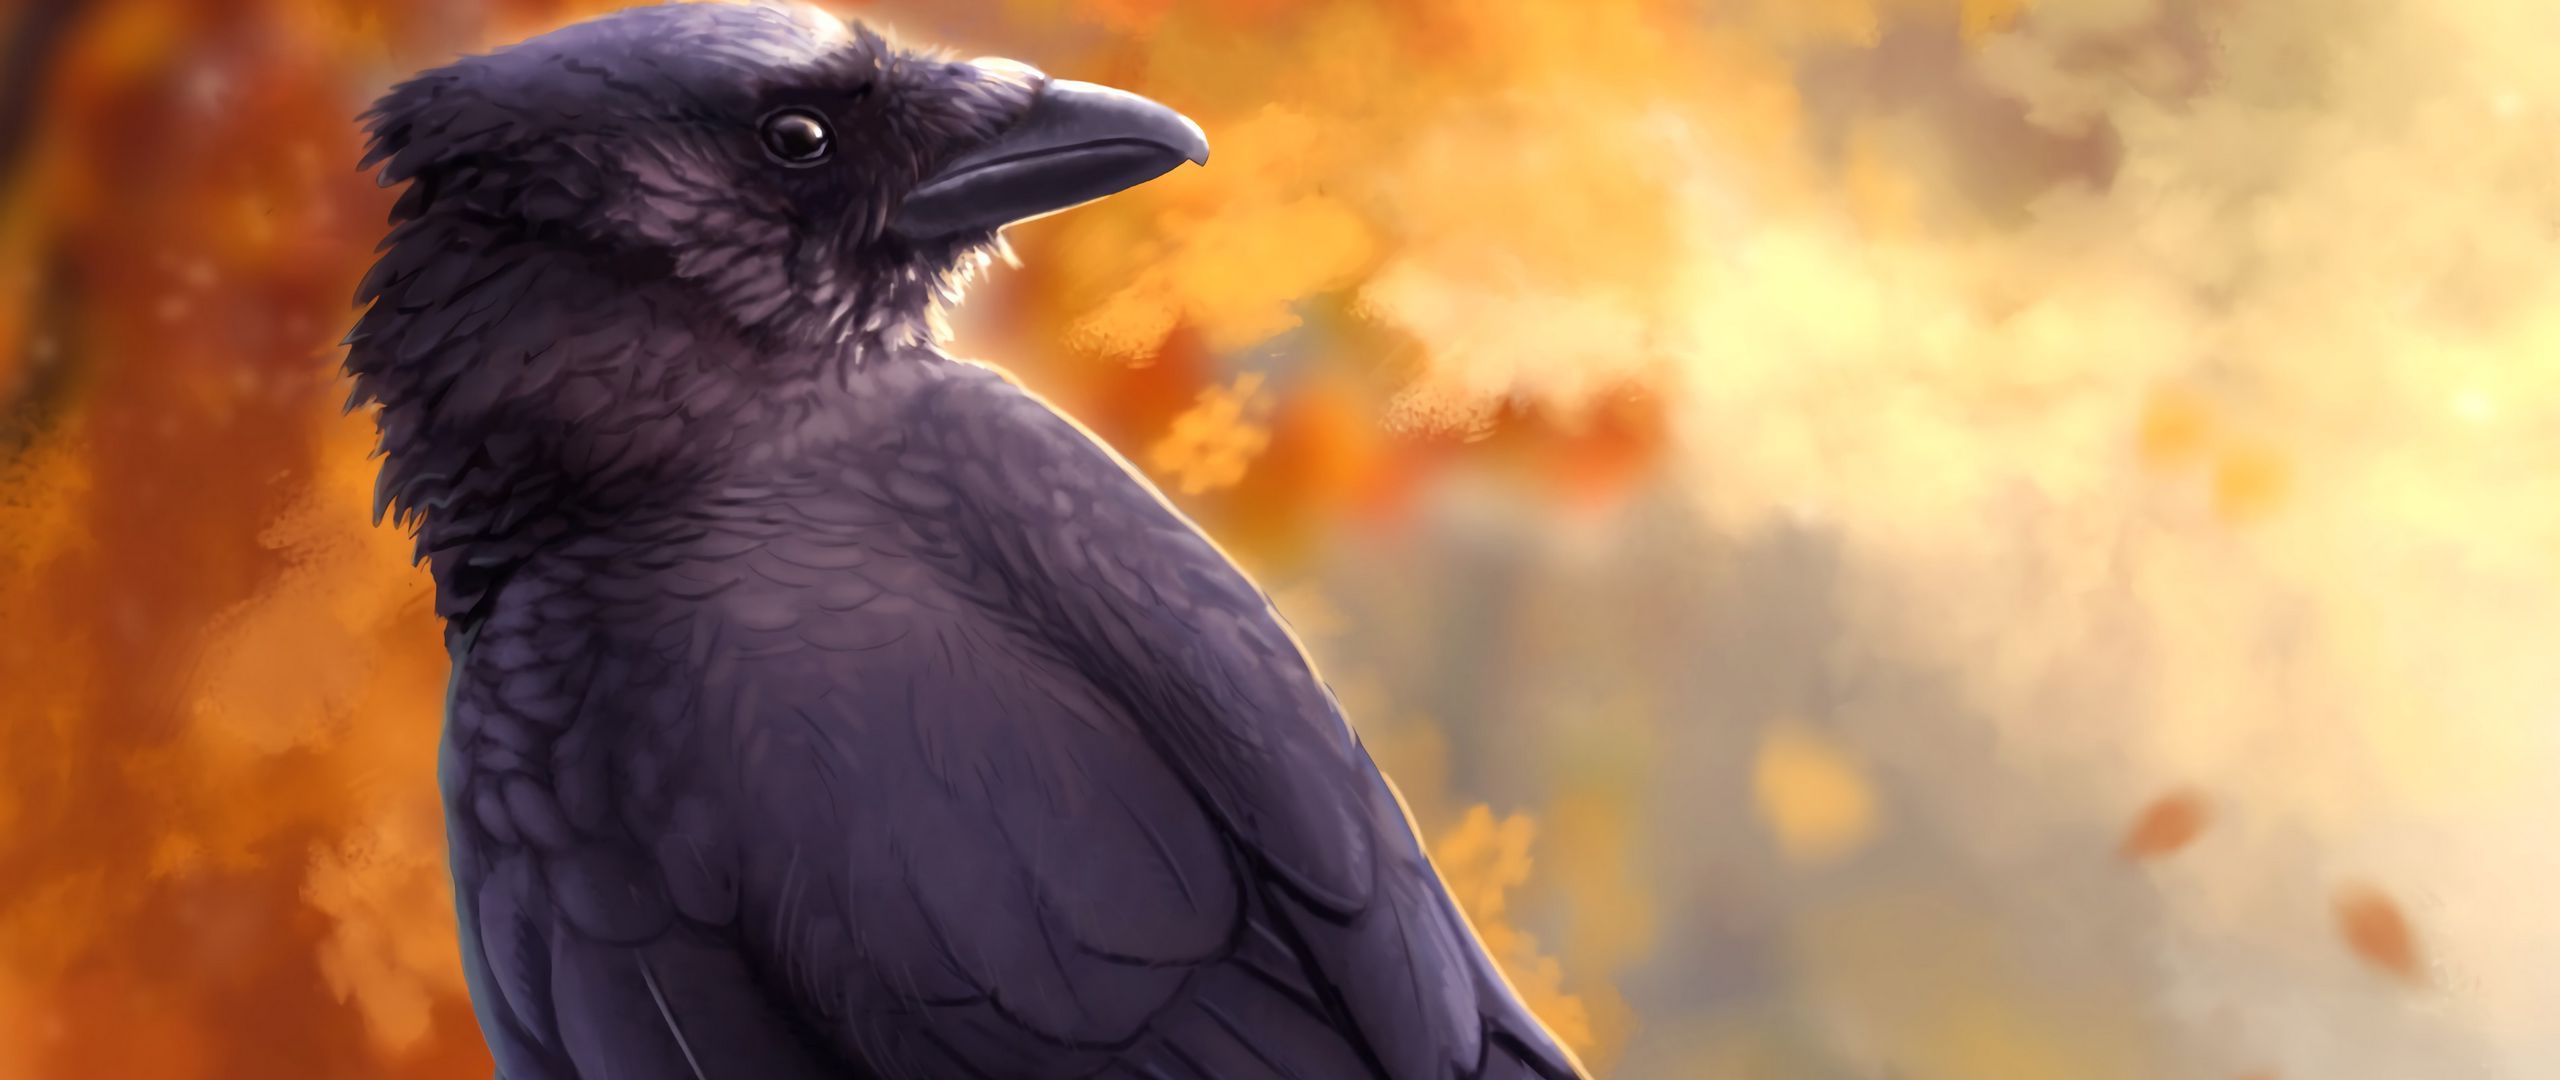 Download wallpaper 2560x1080 raven, bird, art, black, autumn dual wide 1080p HD background